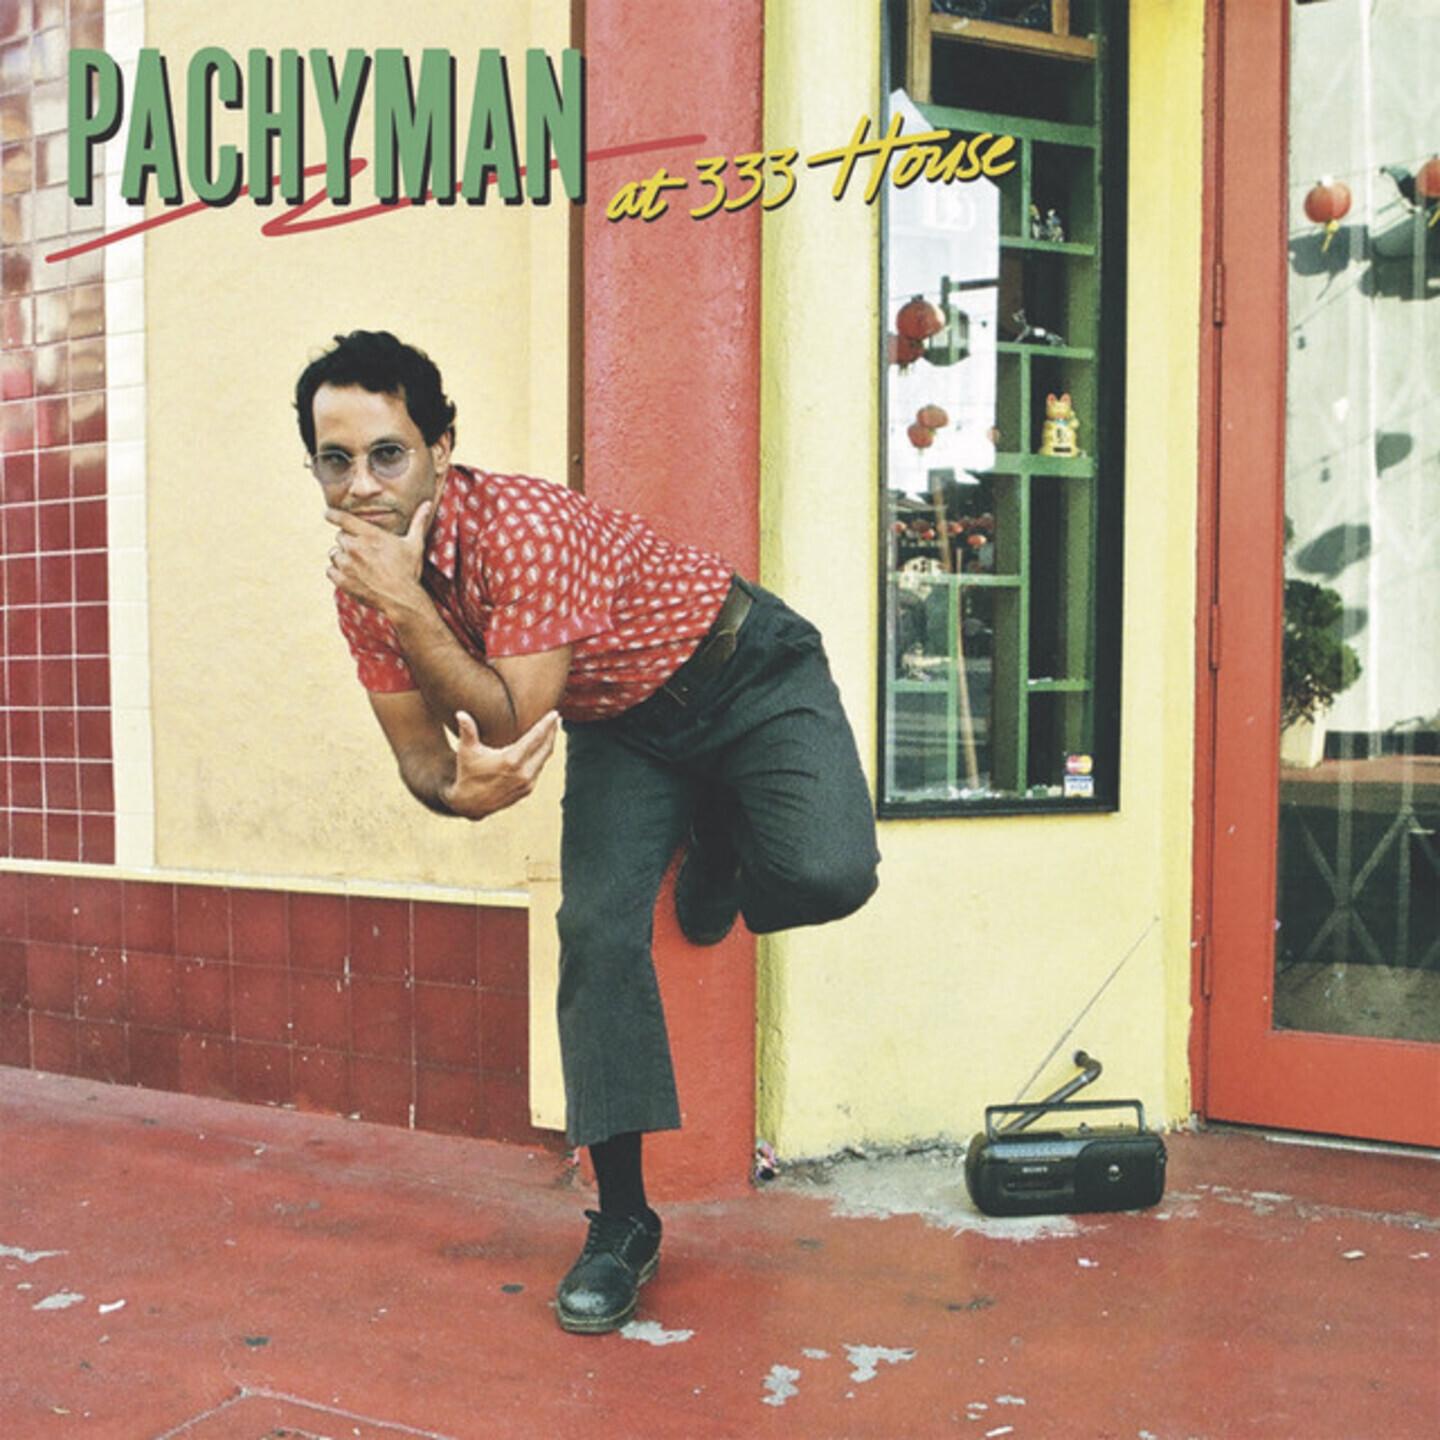 PACHYMAN - At 333 House LP